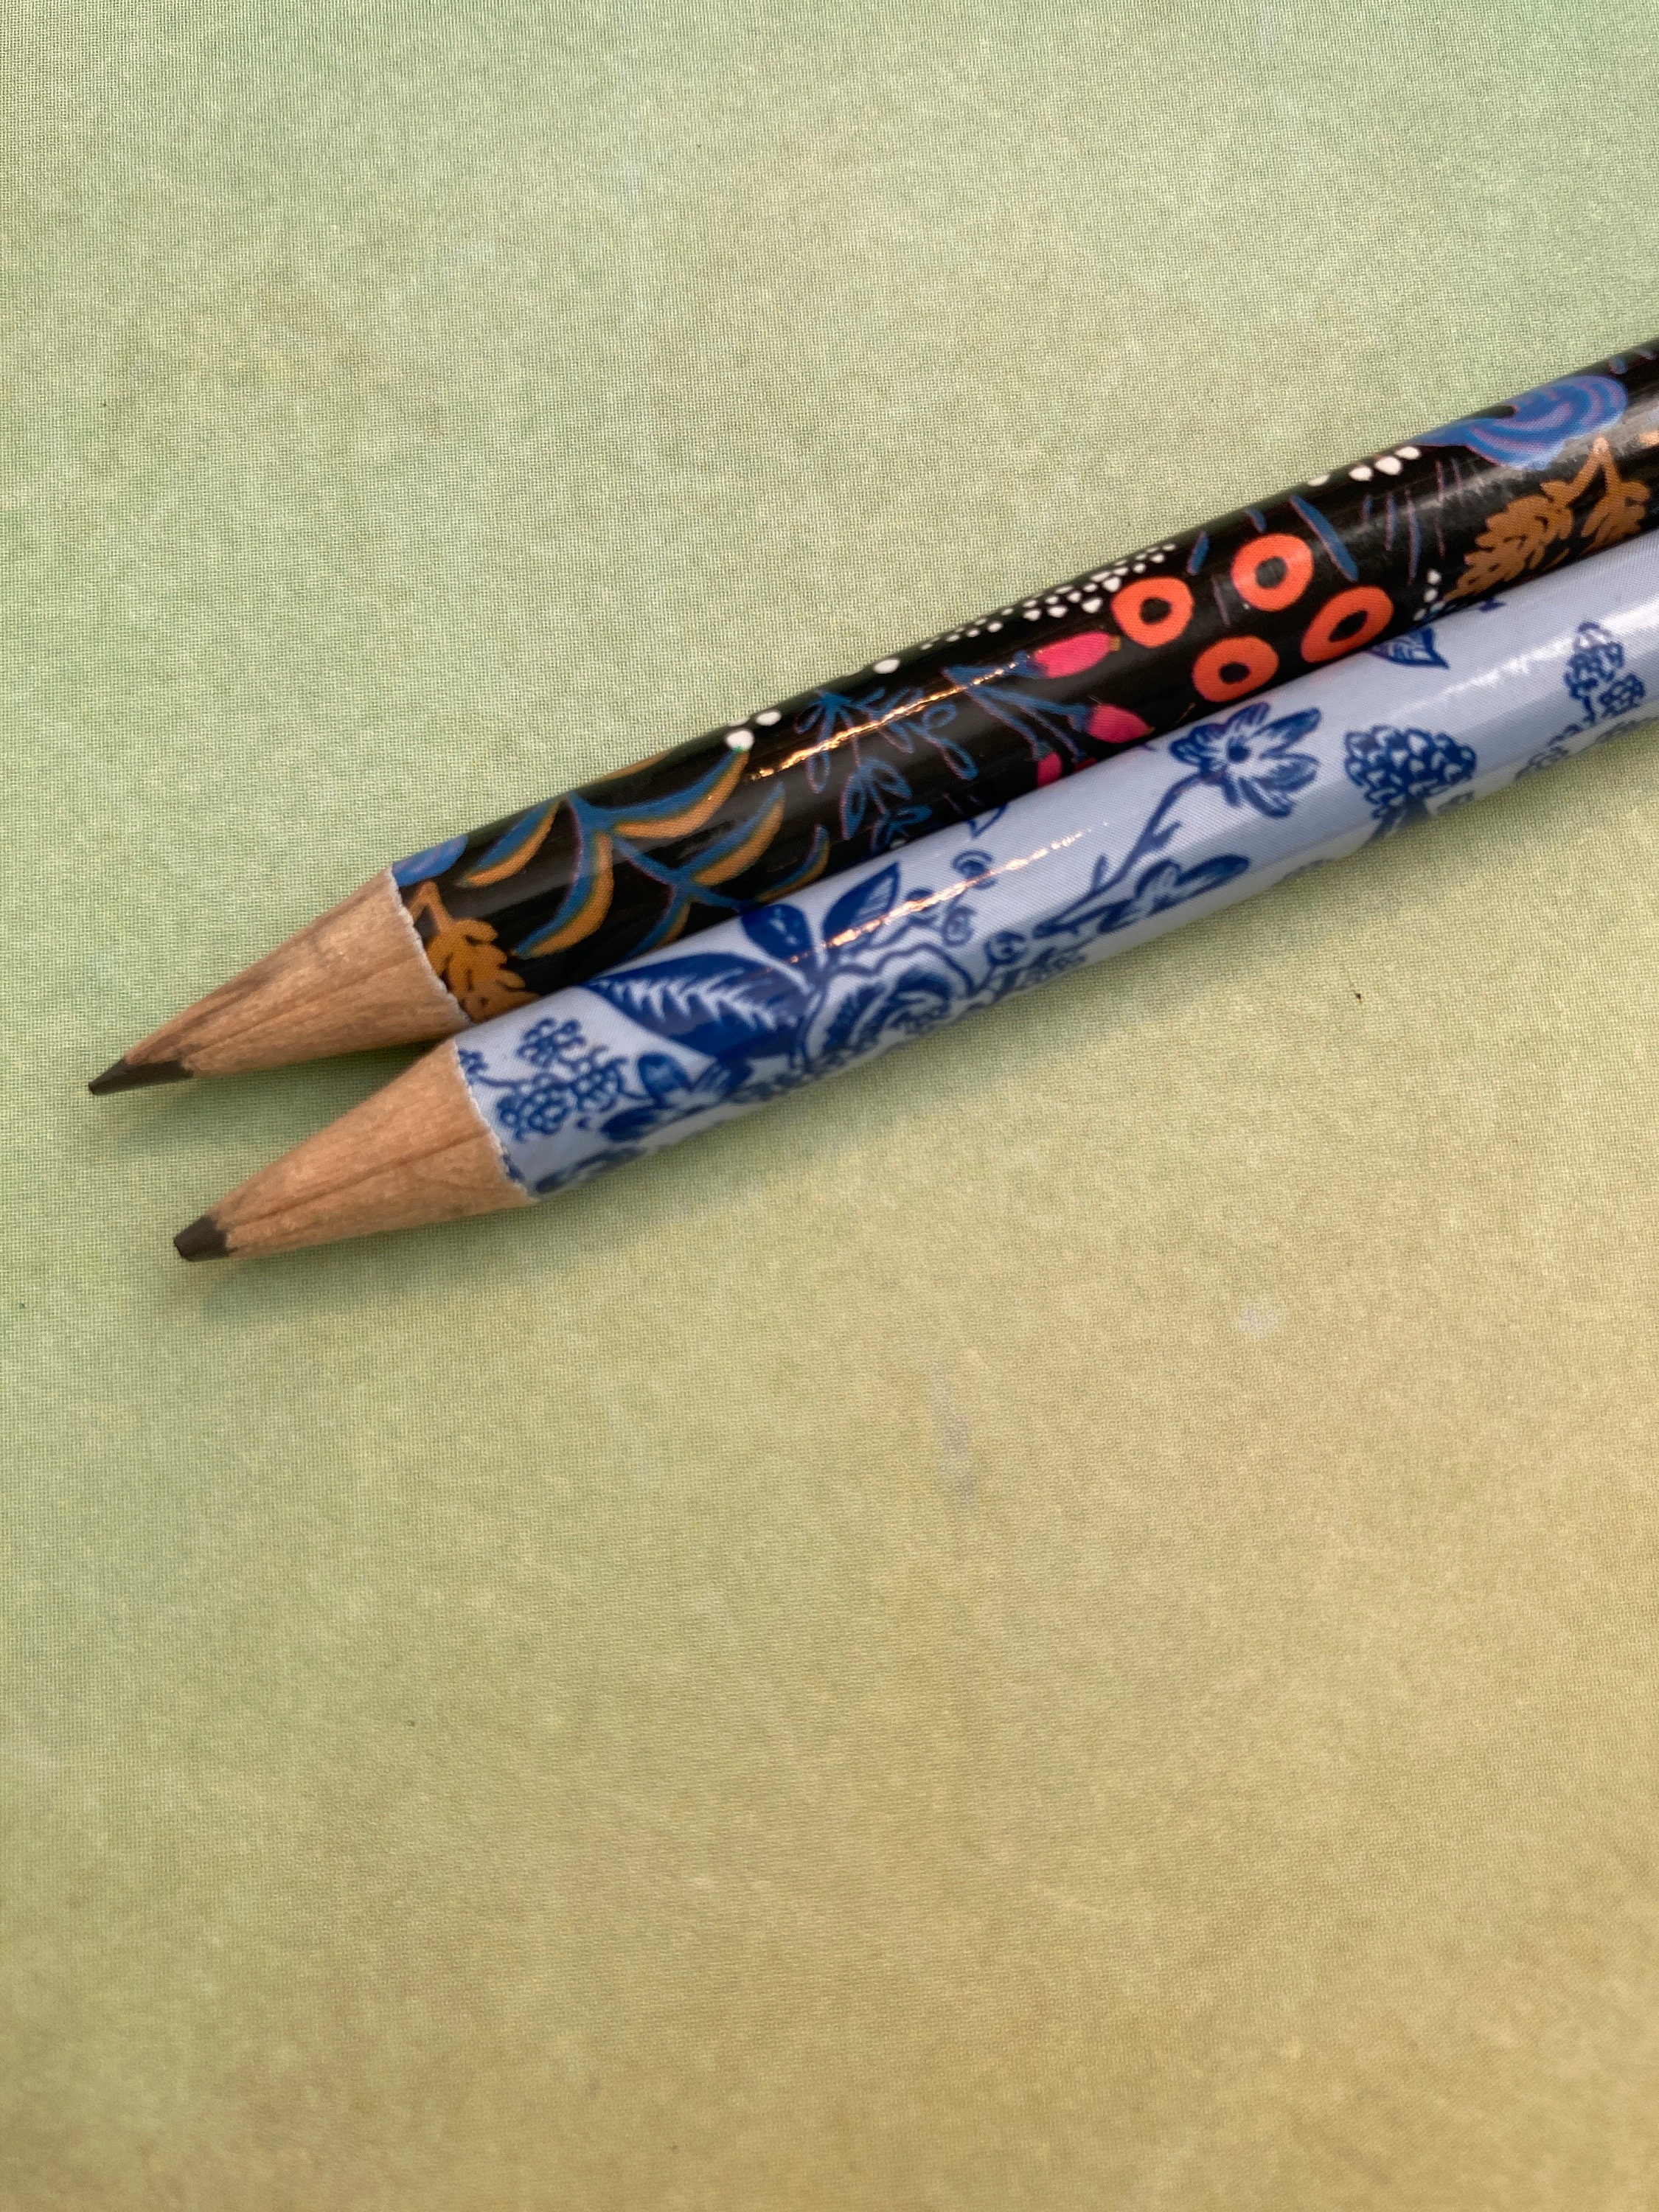 Lot of 8 Vintage Bendy Pencils, Long Flexible Pencil Set, Novelty Plastic  Pencils 